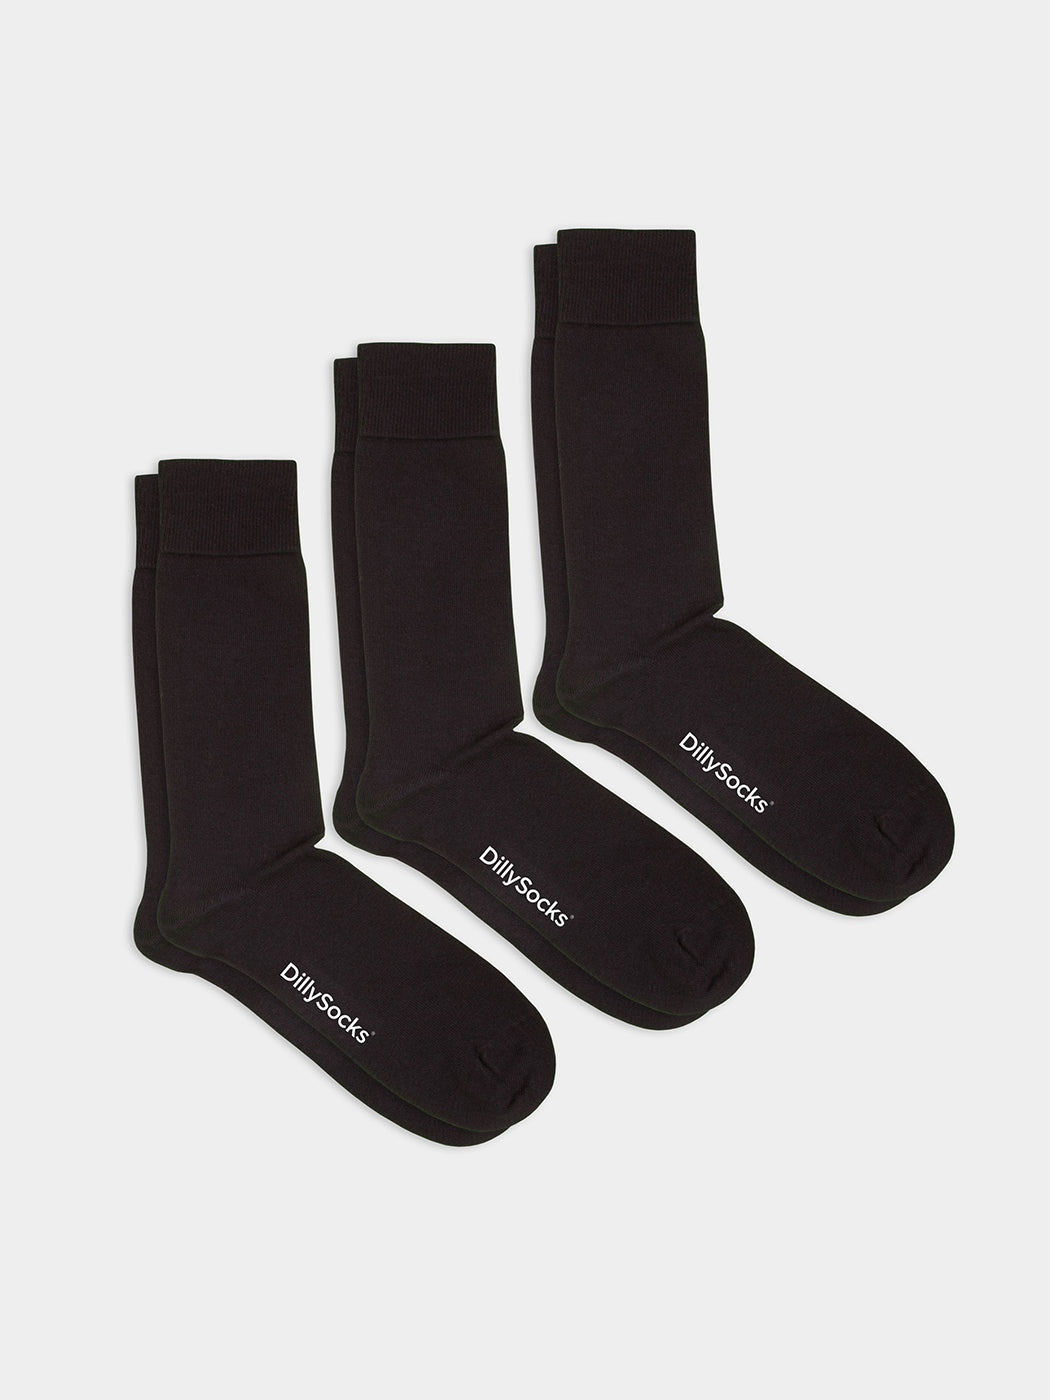 Pack of 3 pairs of plain black socks